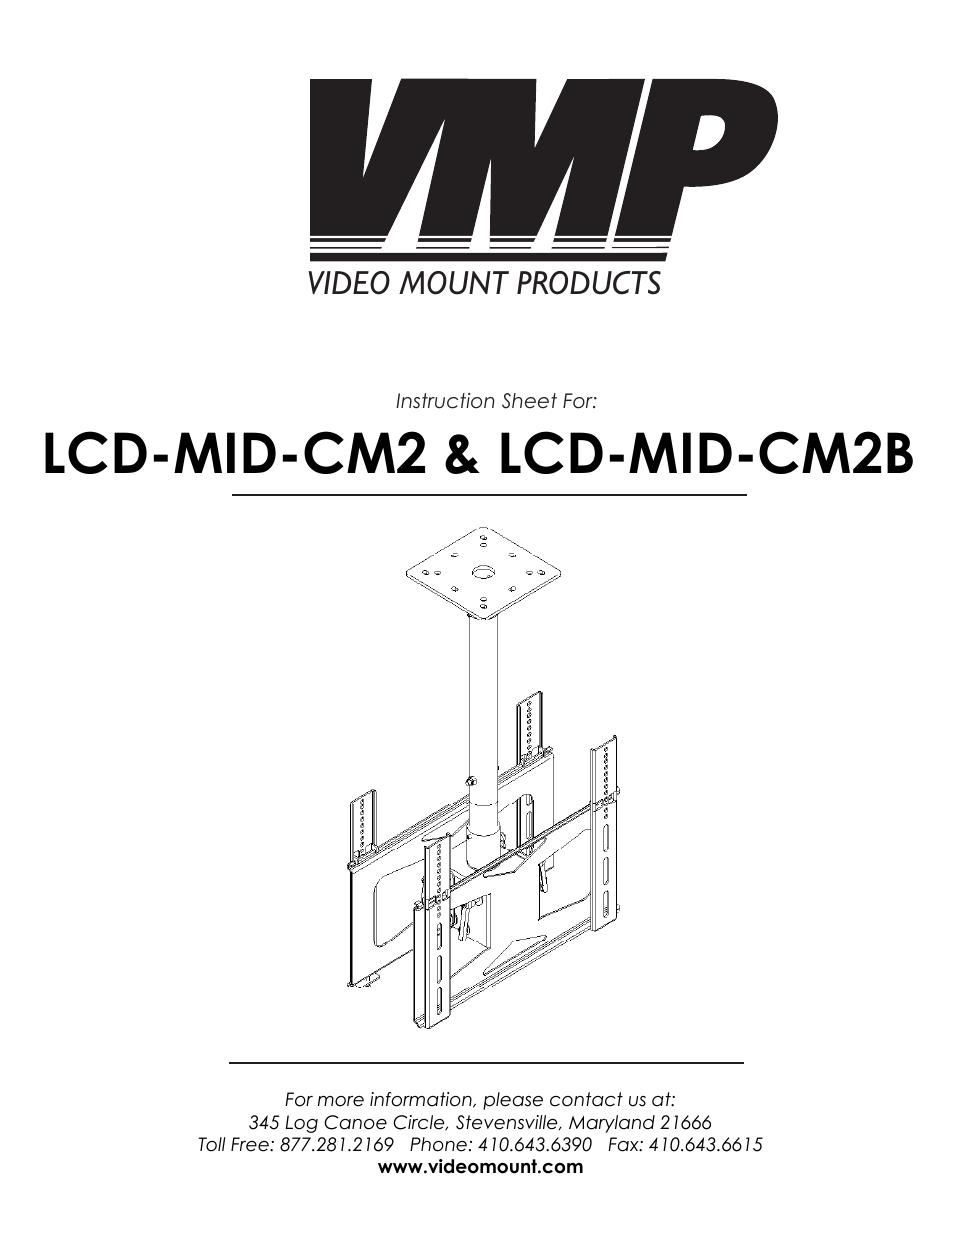 LCD-MID-CM2B